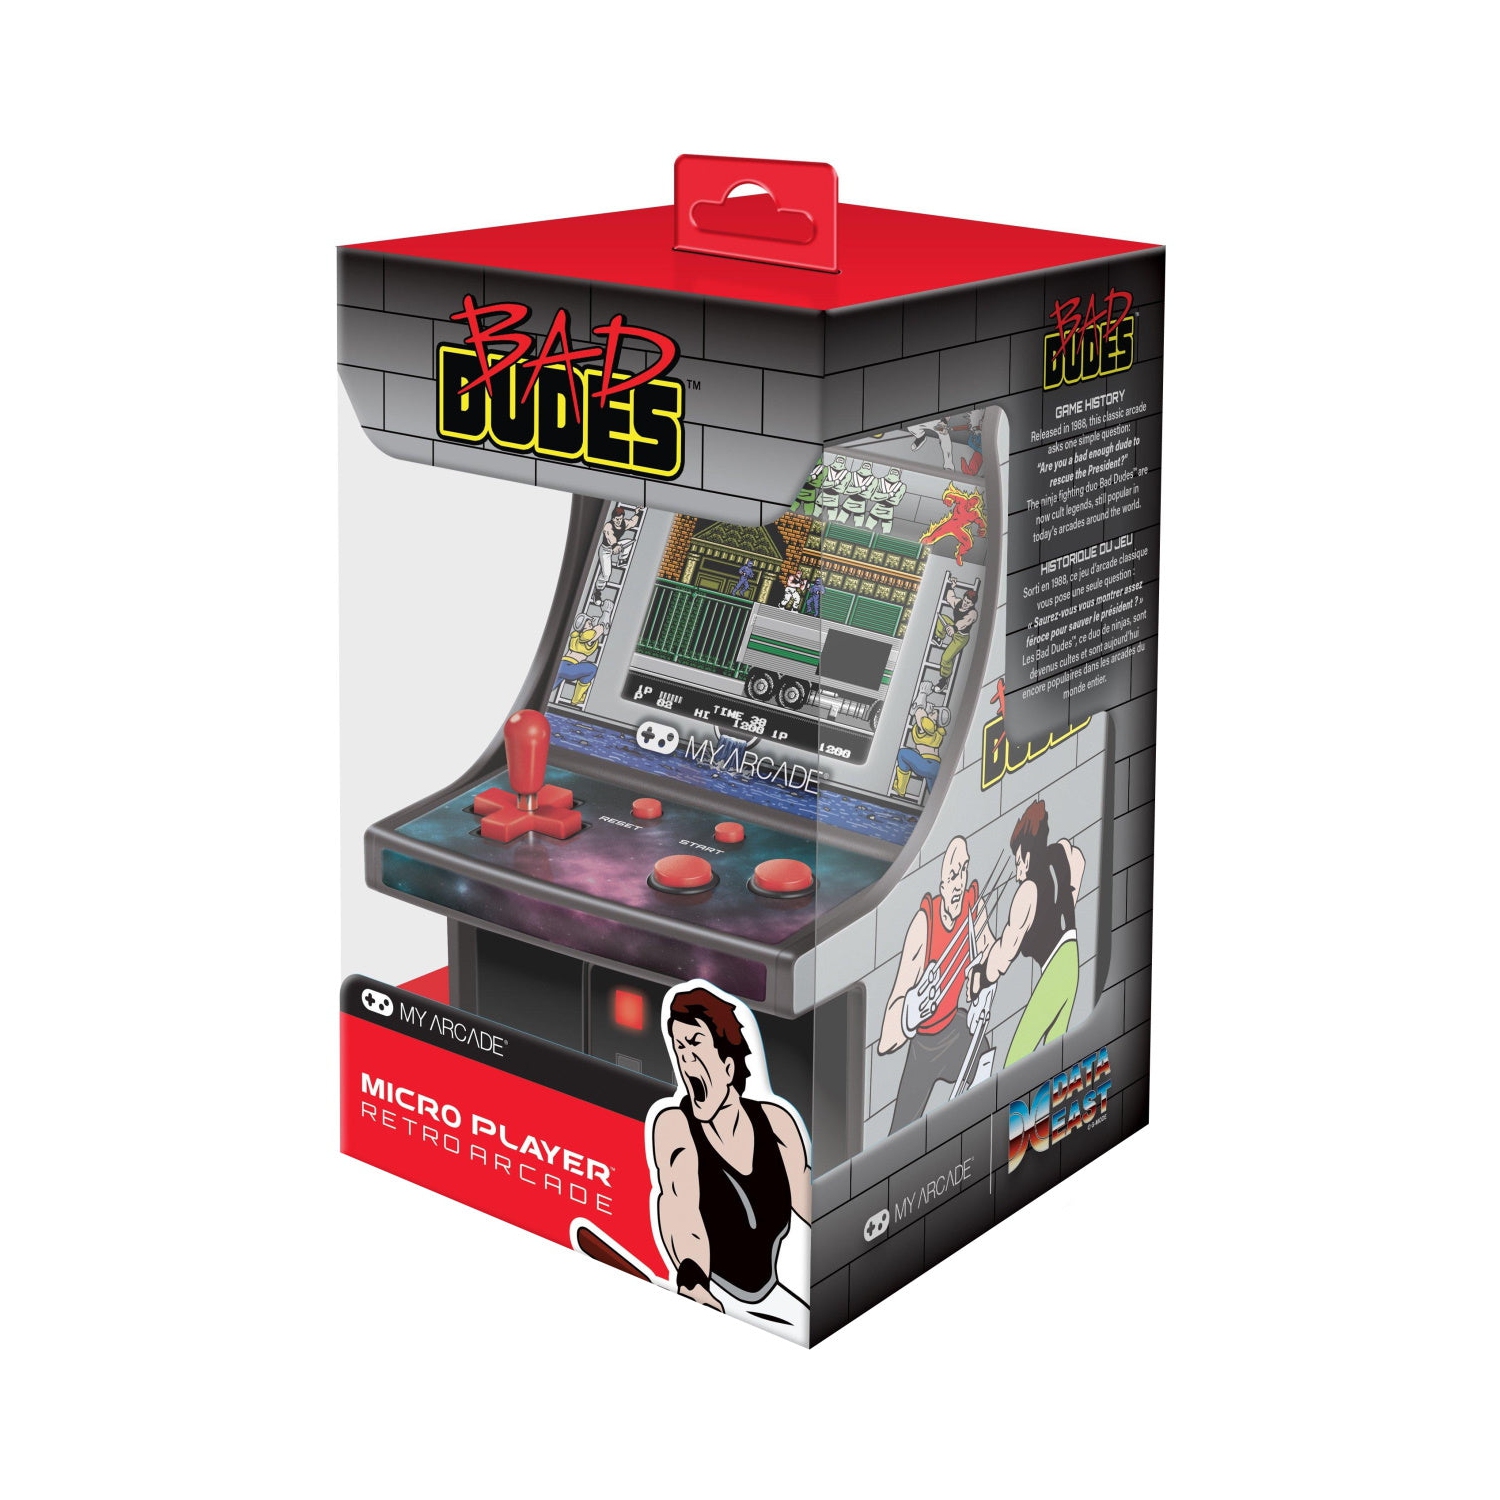 My Arcade Micro Player 6" Collectable Retro Arcade Machine - Bad Dudes